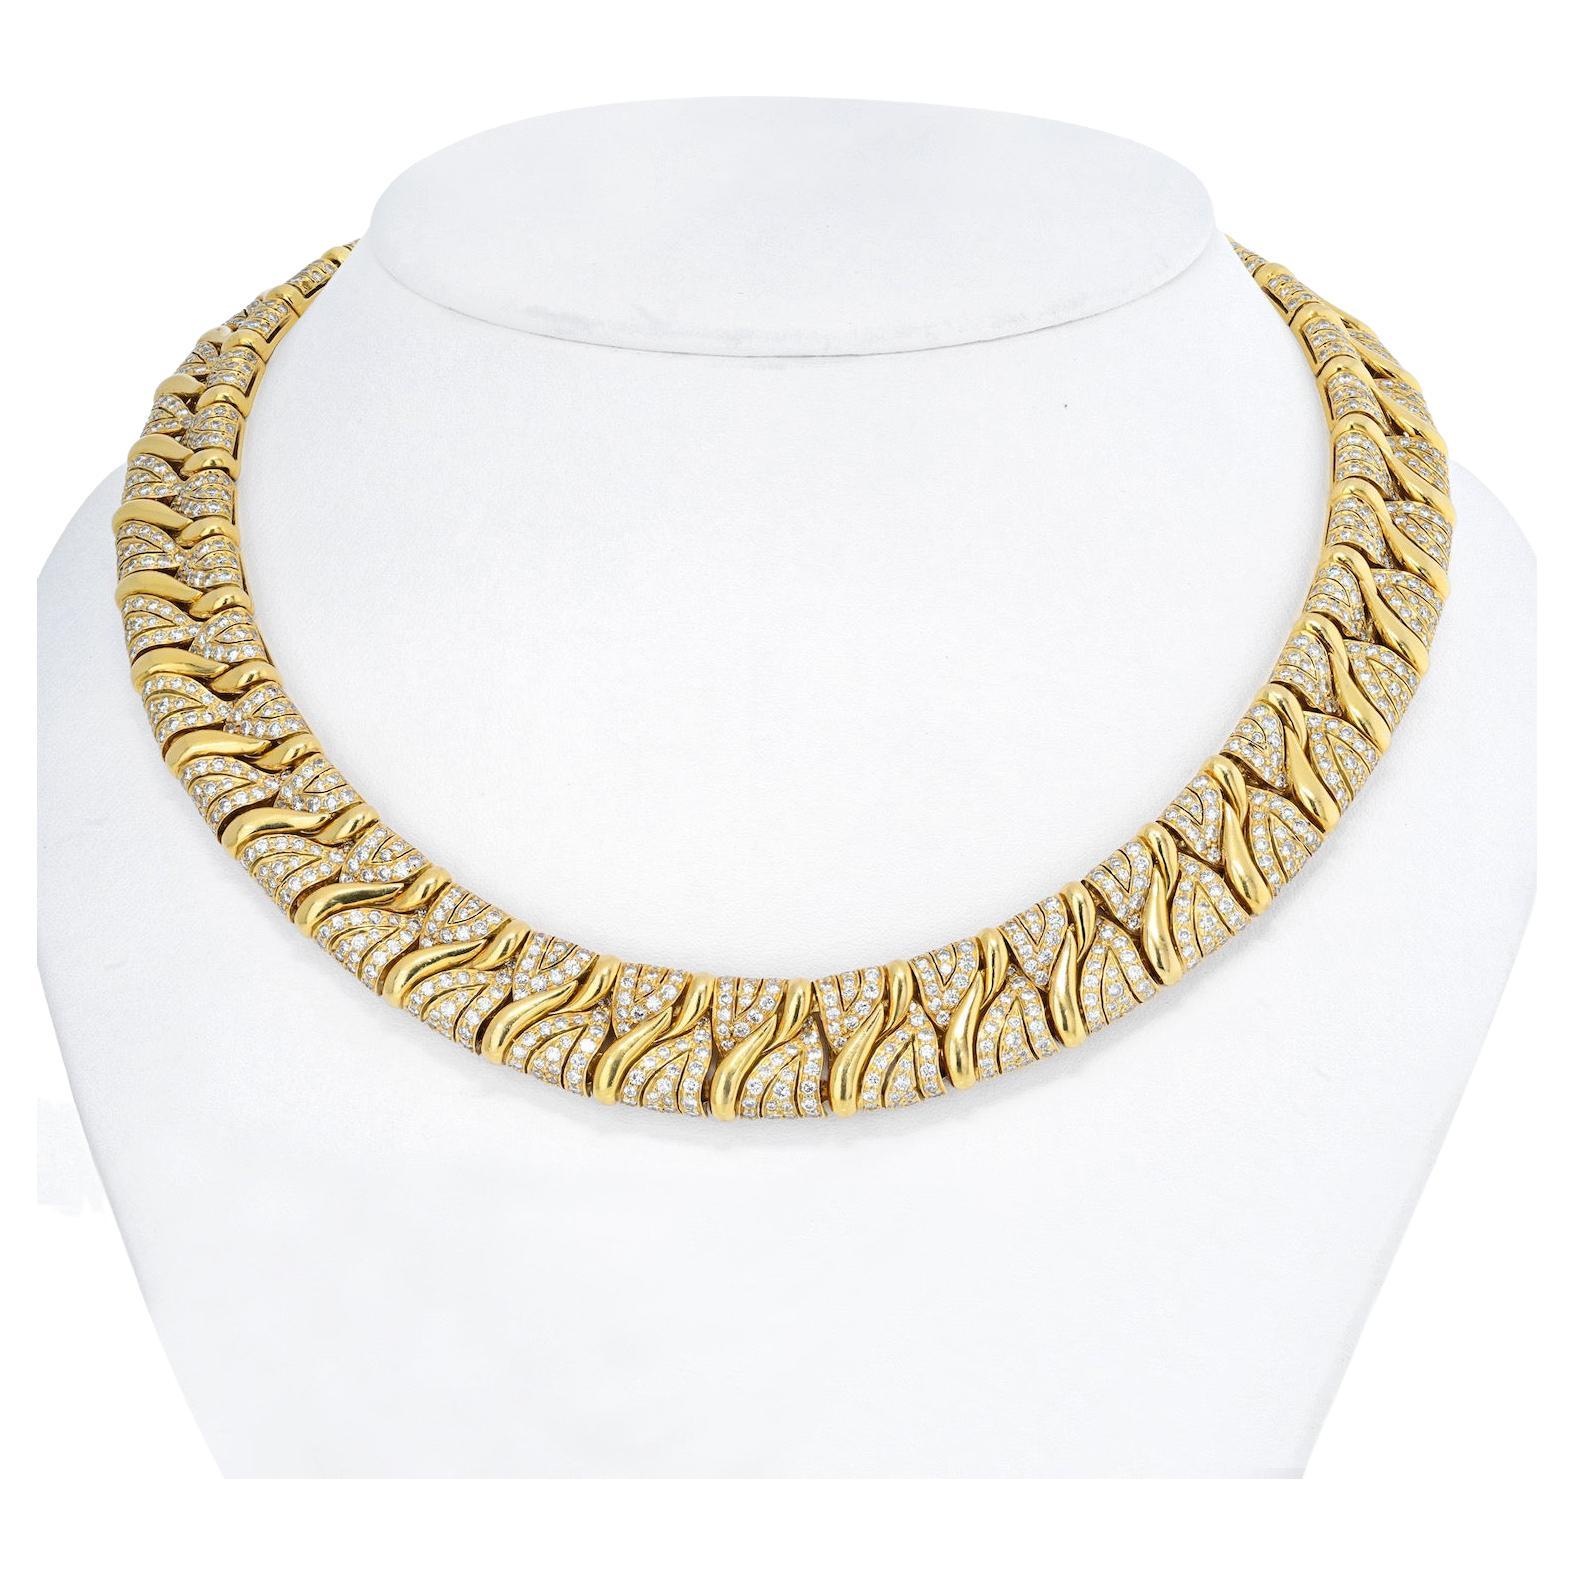 Bvlgari 18K Yellow Gold Diamond Choker Necklace